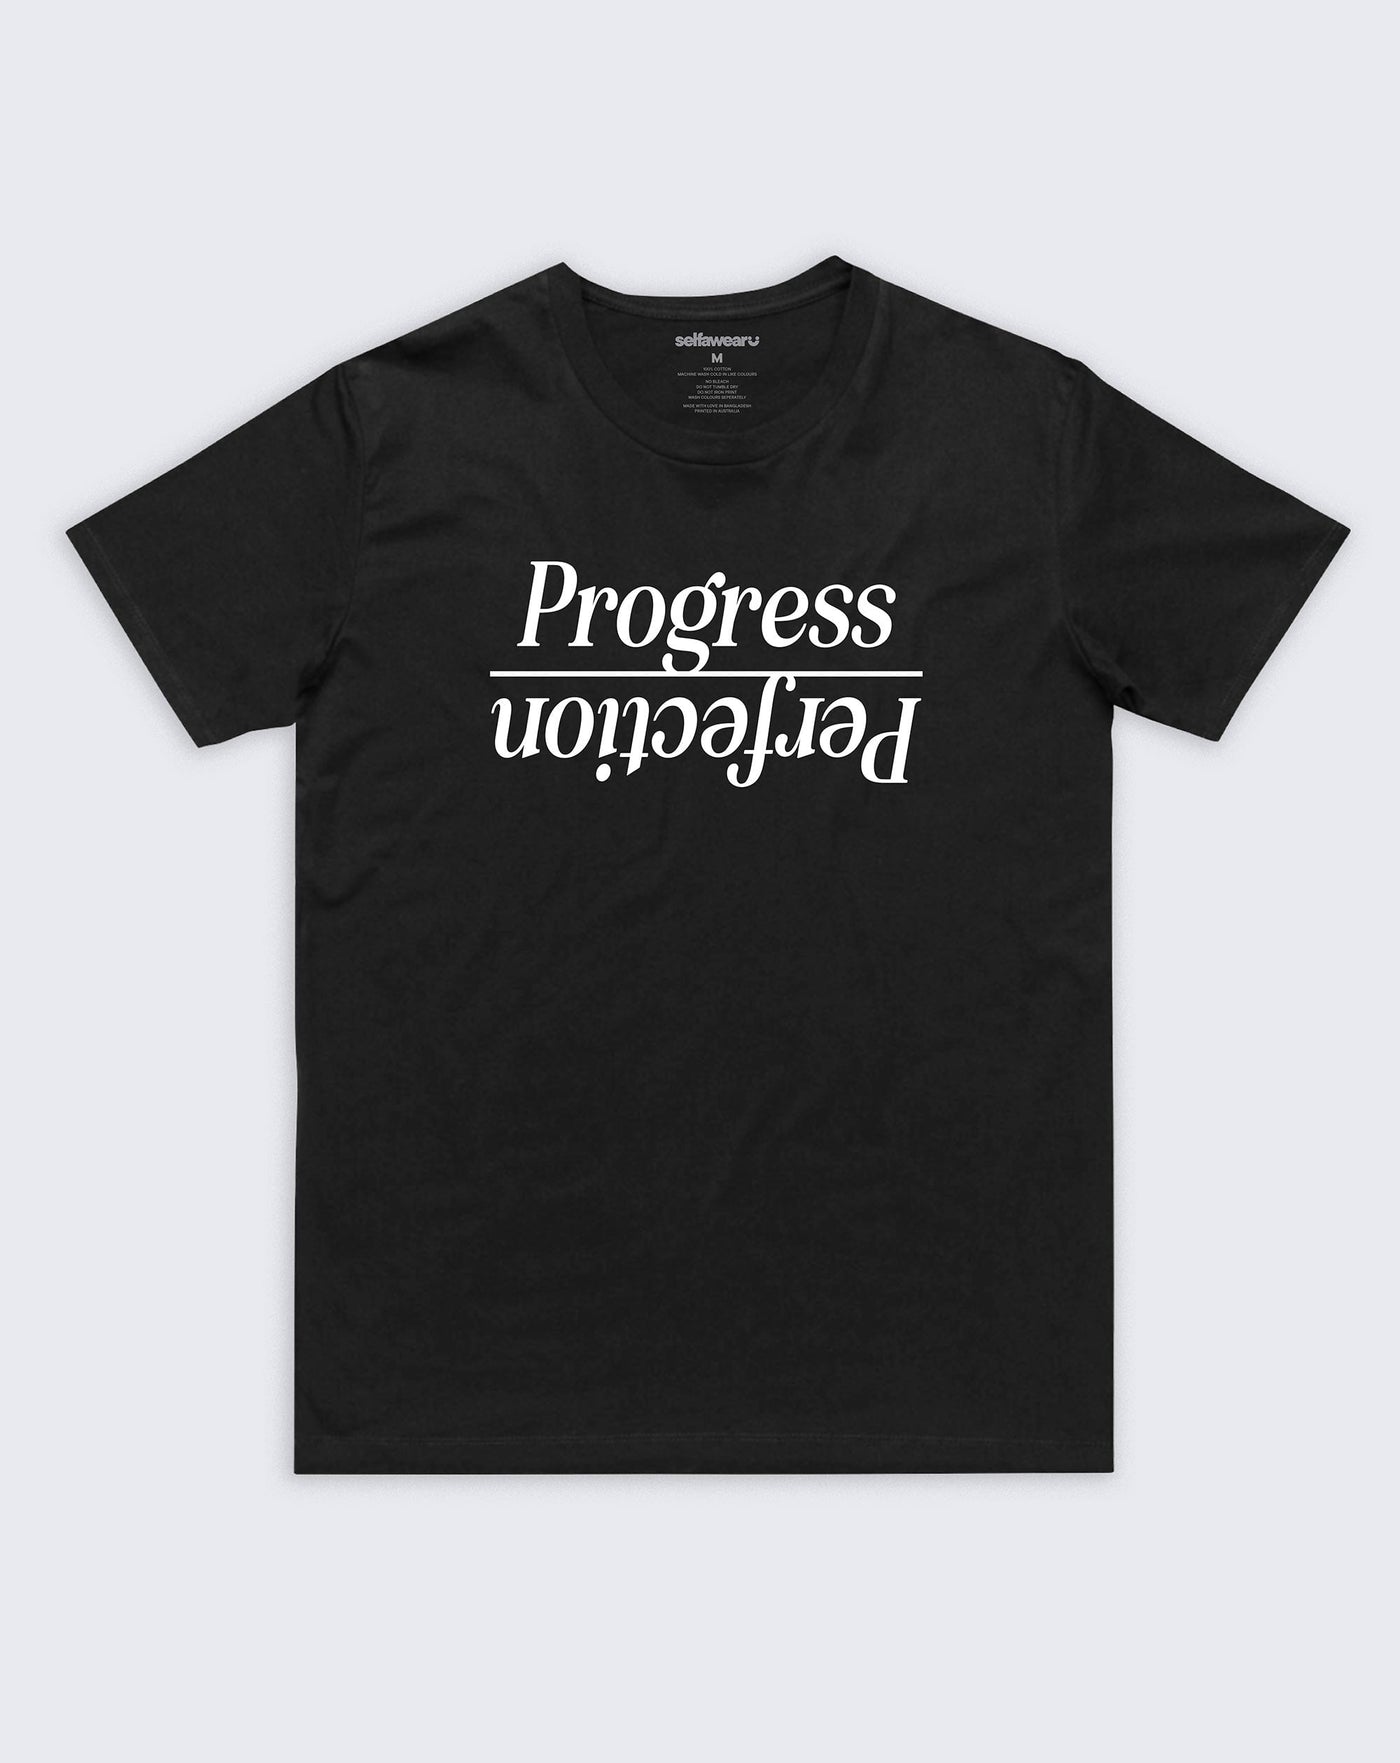 Progress Over Perfection T-Shirt Black Shirts Selfawear 